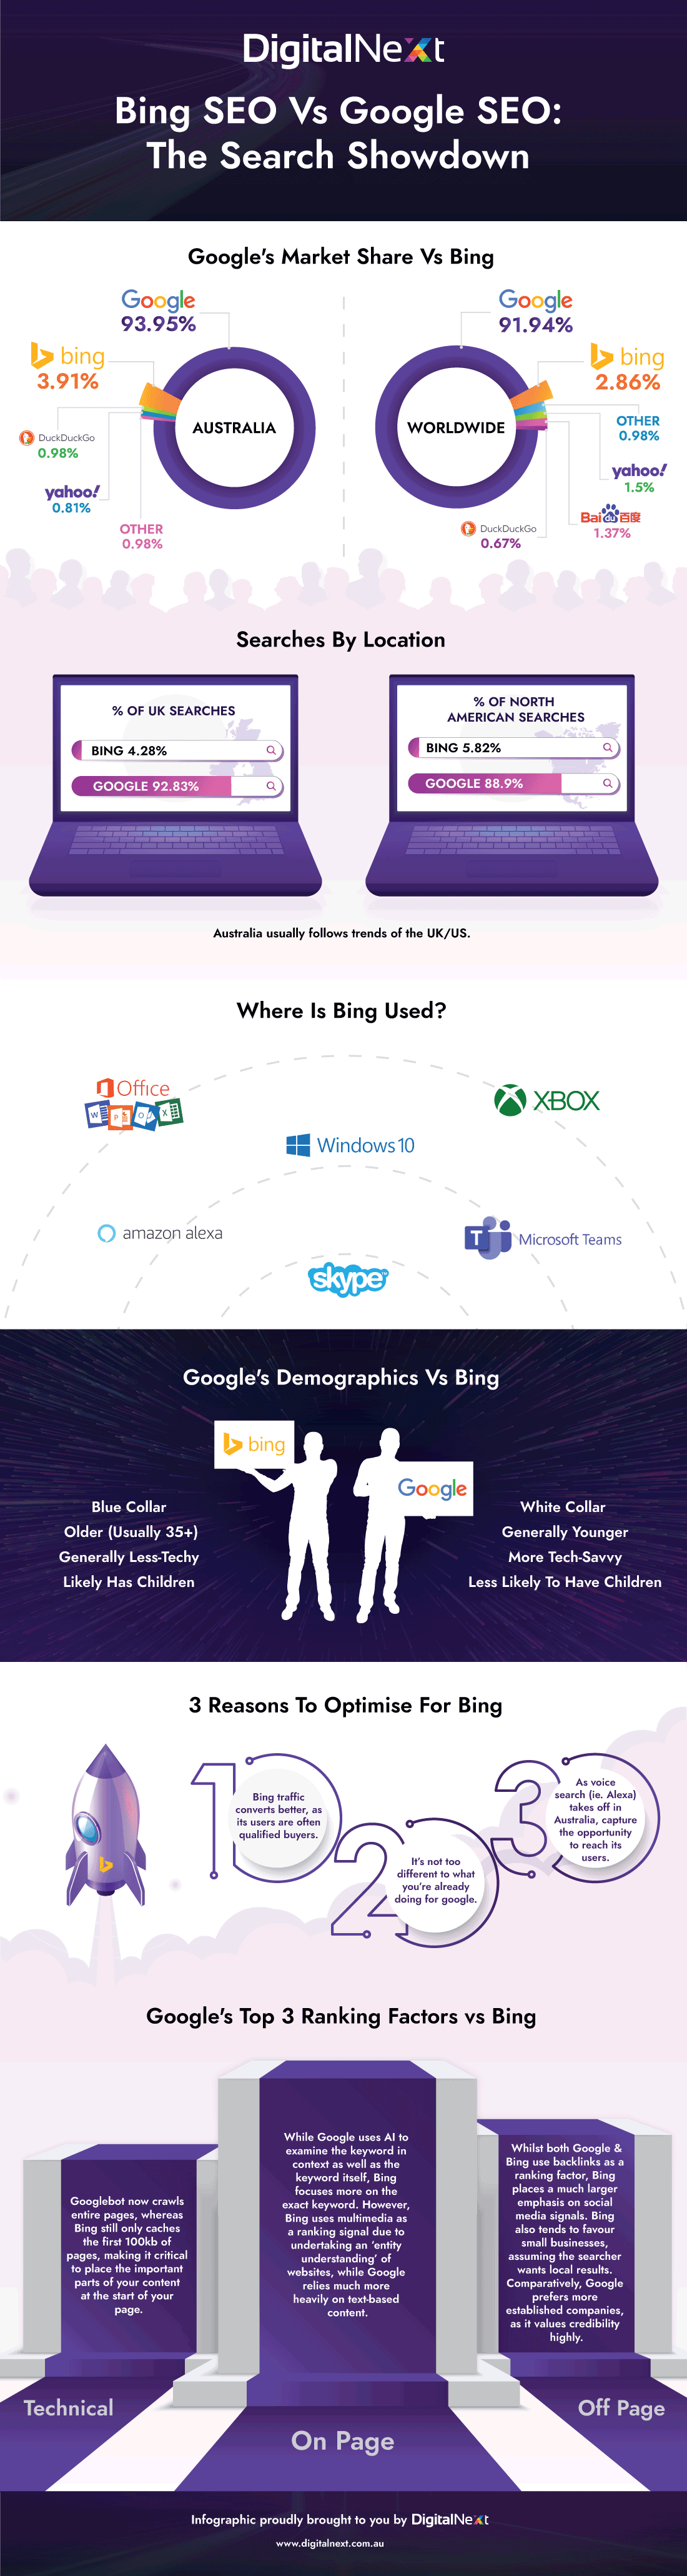 Bing SEO Vs Google SEO Infographic